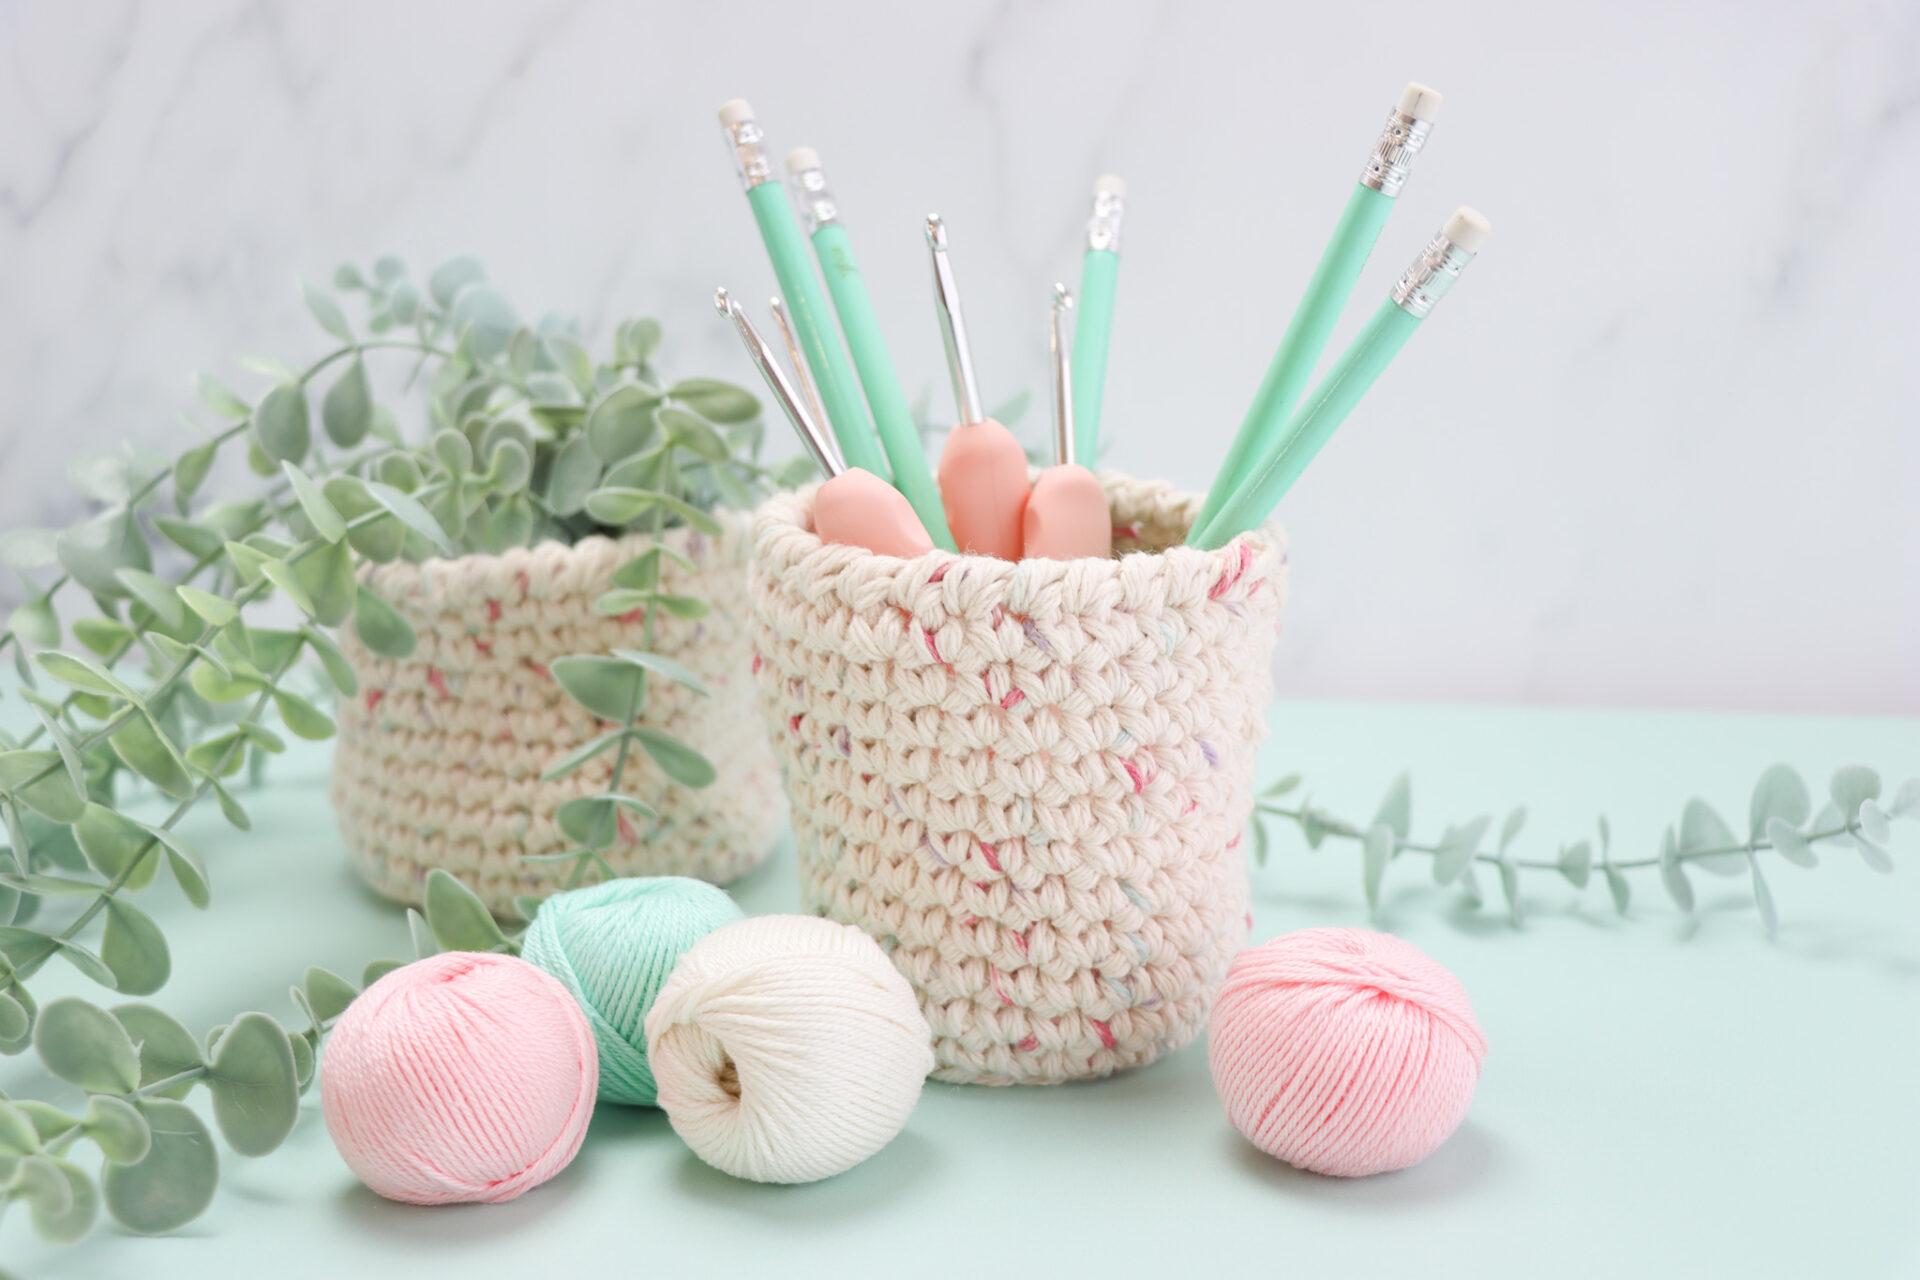 Crochet Yarn Basket